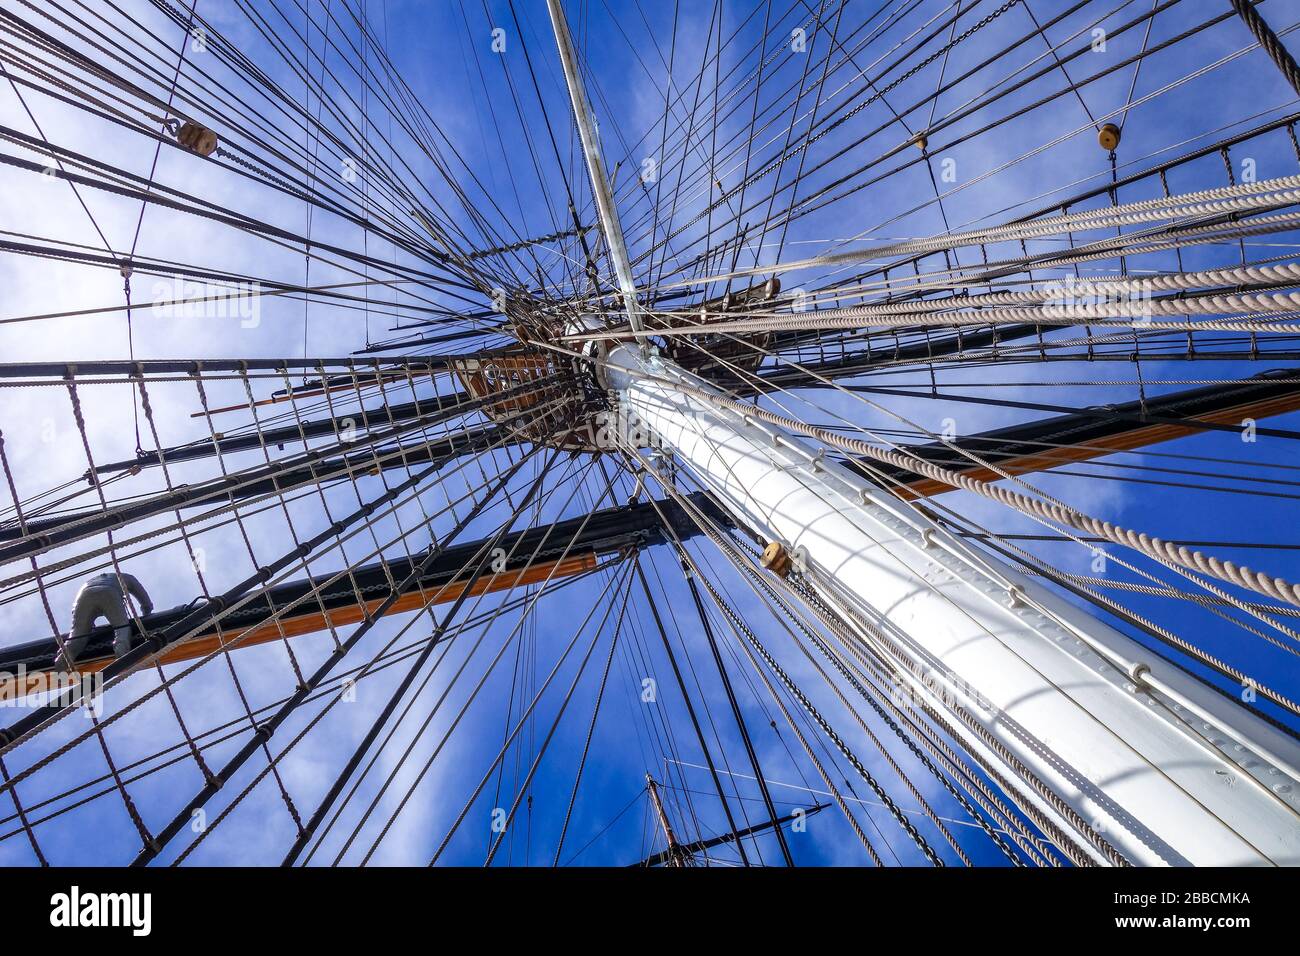 Old naval ship mast and sail ropes detail Stock Photo